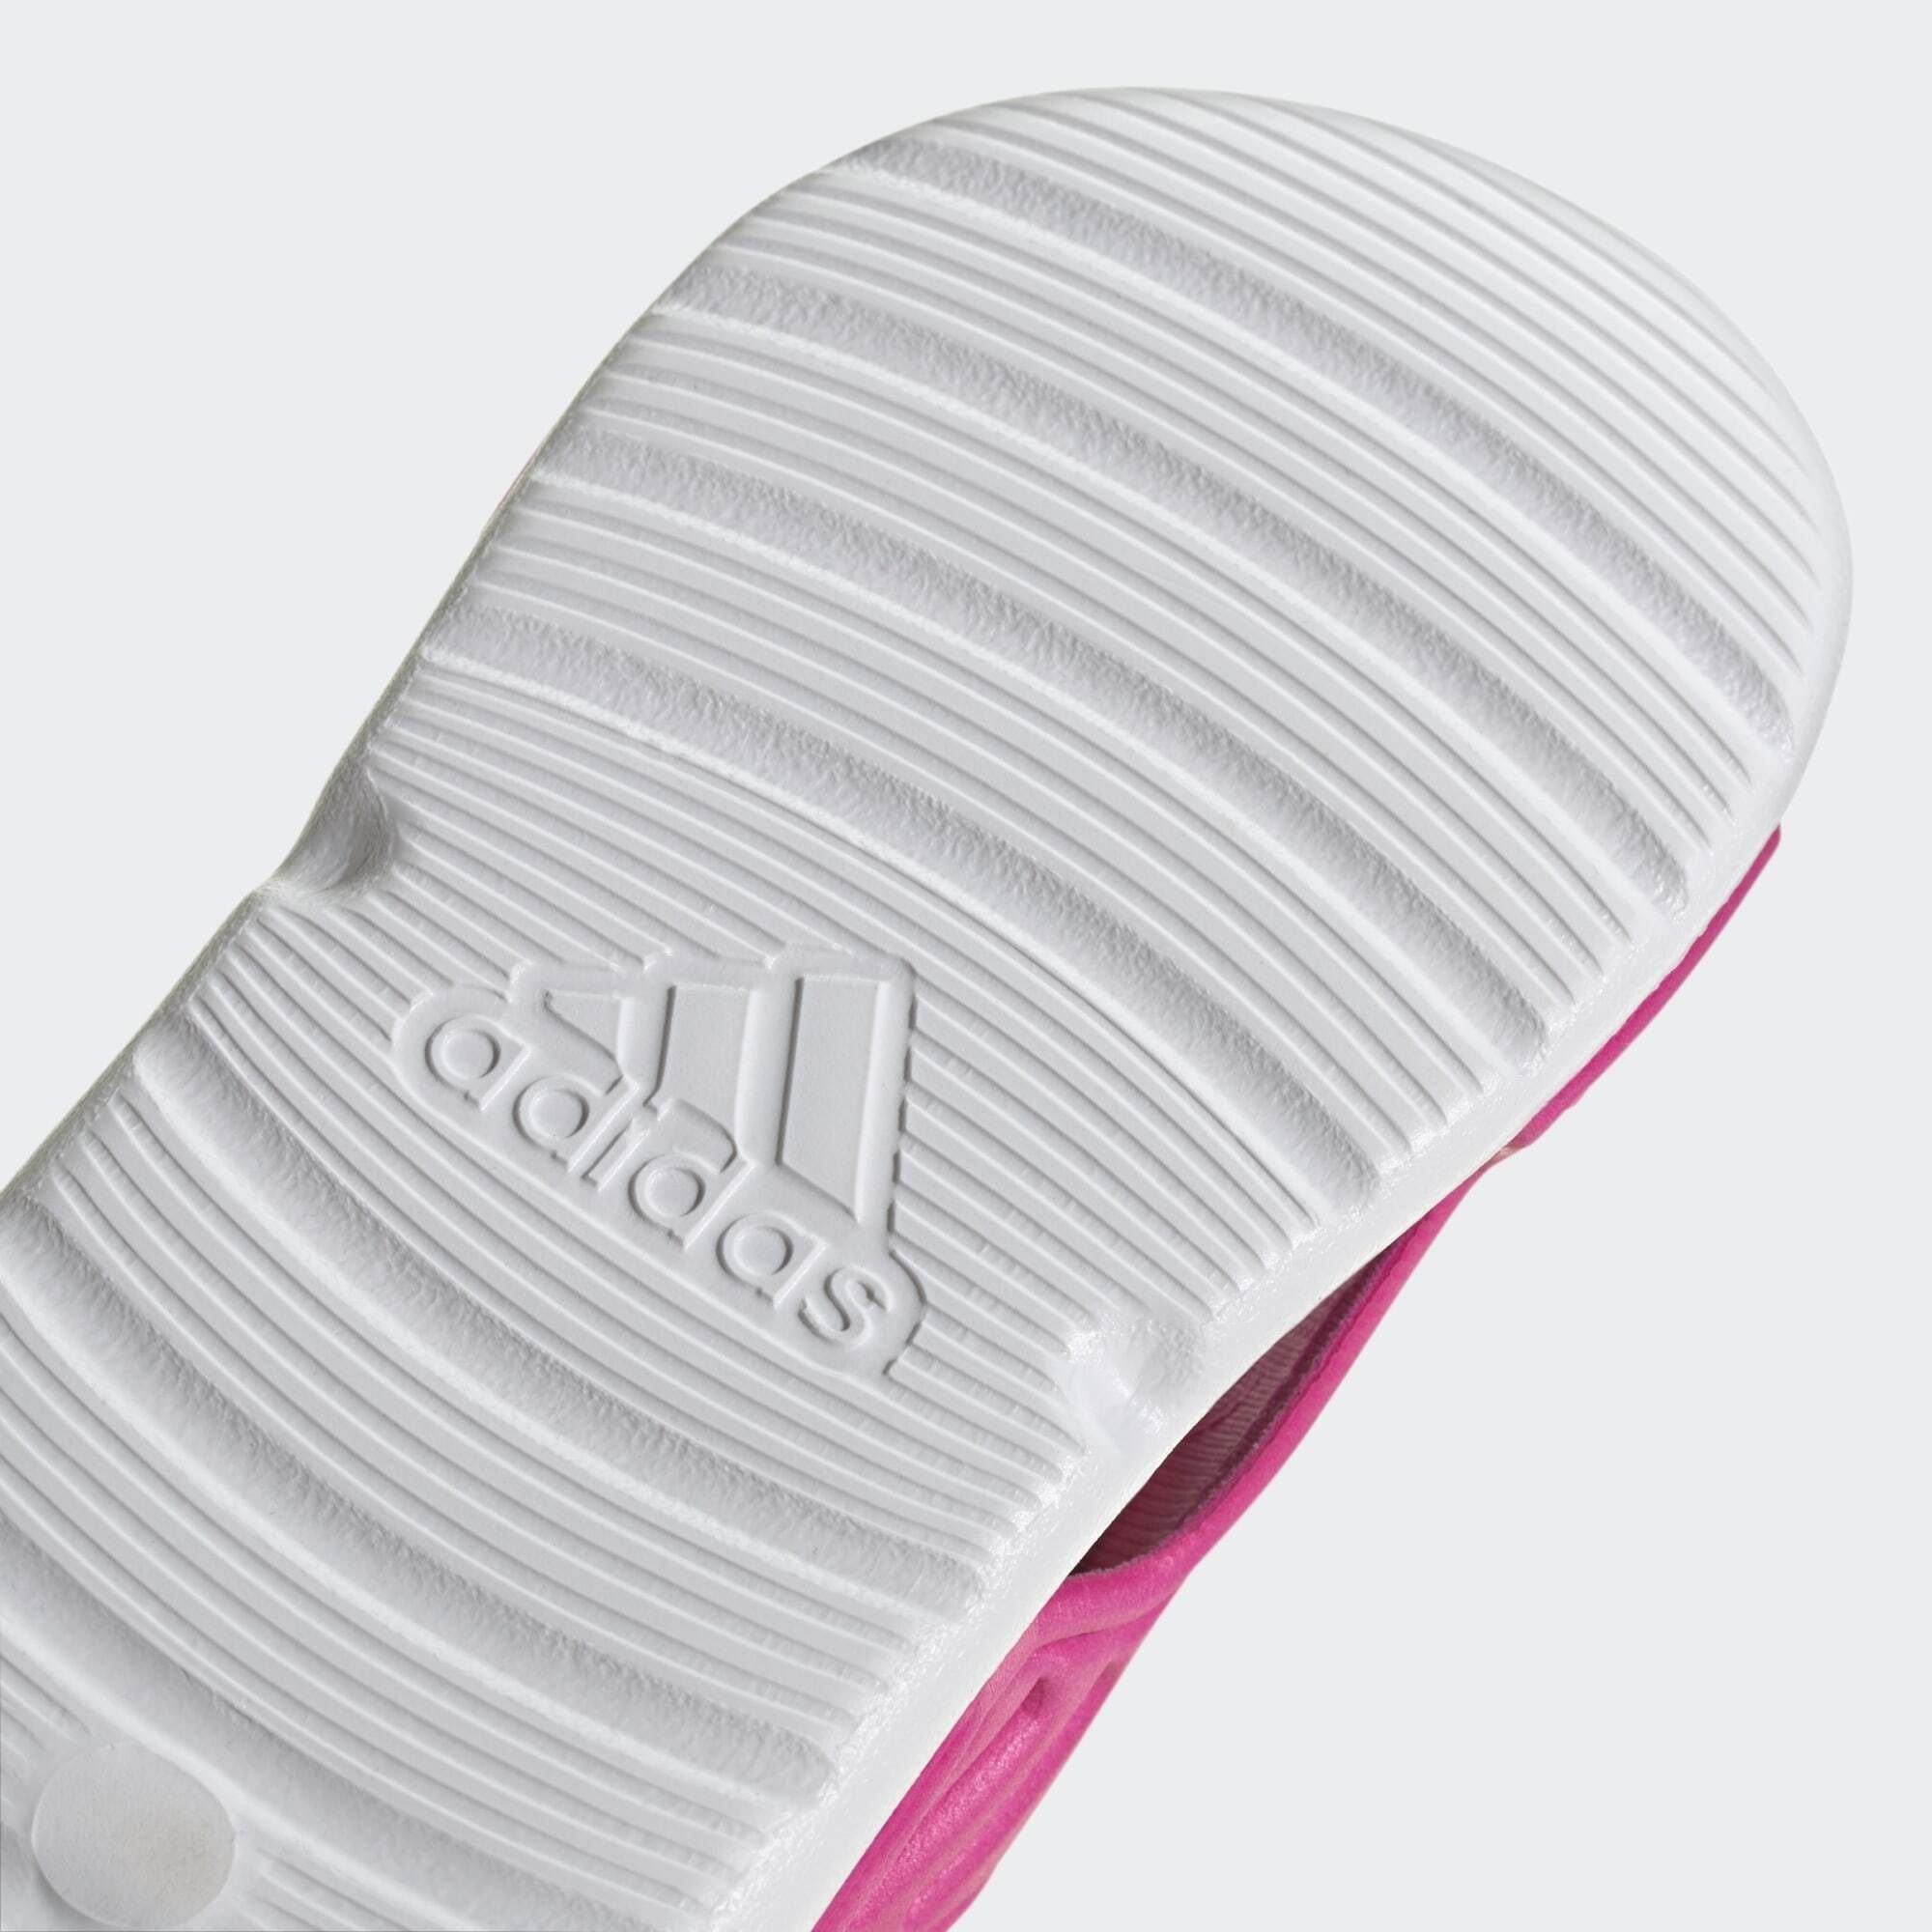 adidas Sportswear ALTASWIM SANDALE Pink Clear Badesandale / Fuchsia White / Cloud Lucid